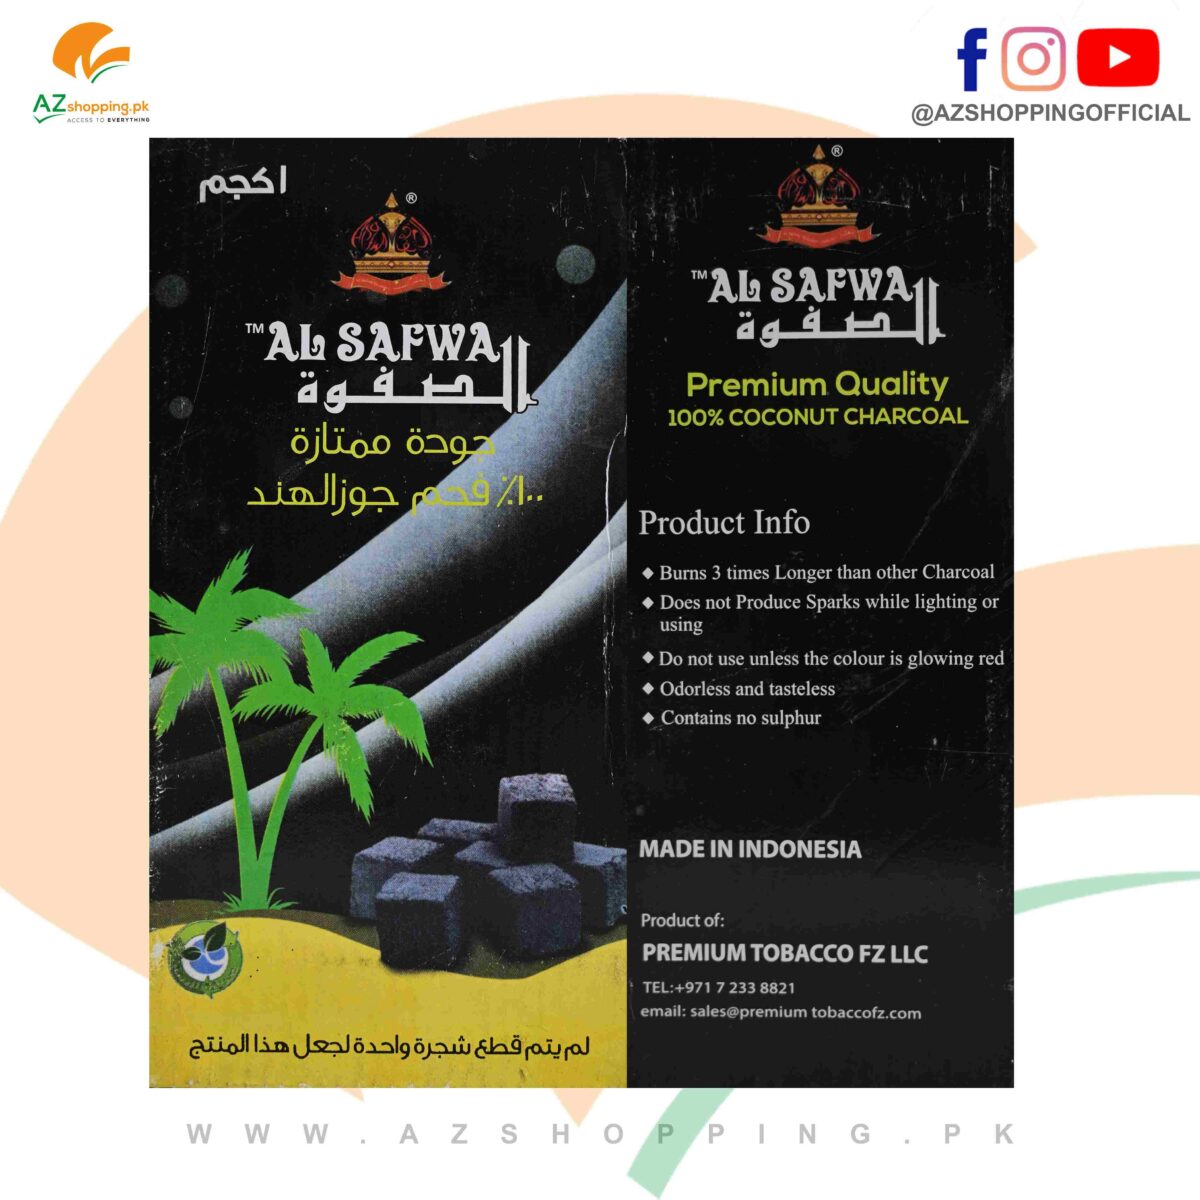 Al Safwa – Premium Quality 100% Coconut Charcoal 1 KG (72 Cubes) for Shisha, Hookah, Barbeque Coal – Burns 3 times longer than Average Charcoal, Odorless, Tasteless & Contain no Sulphur